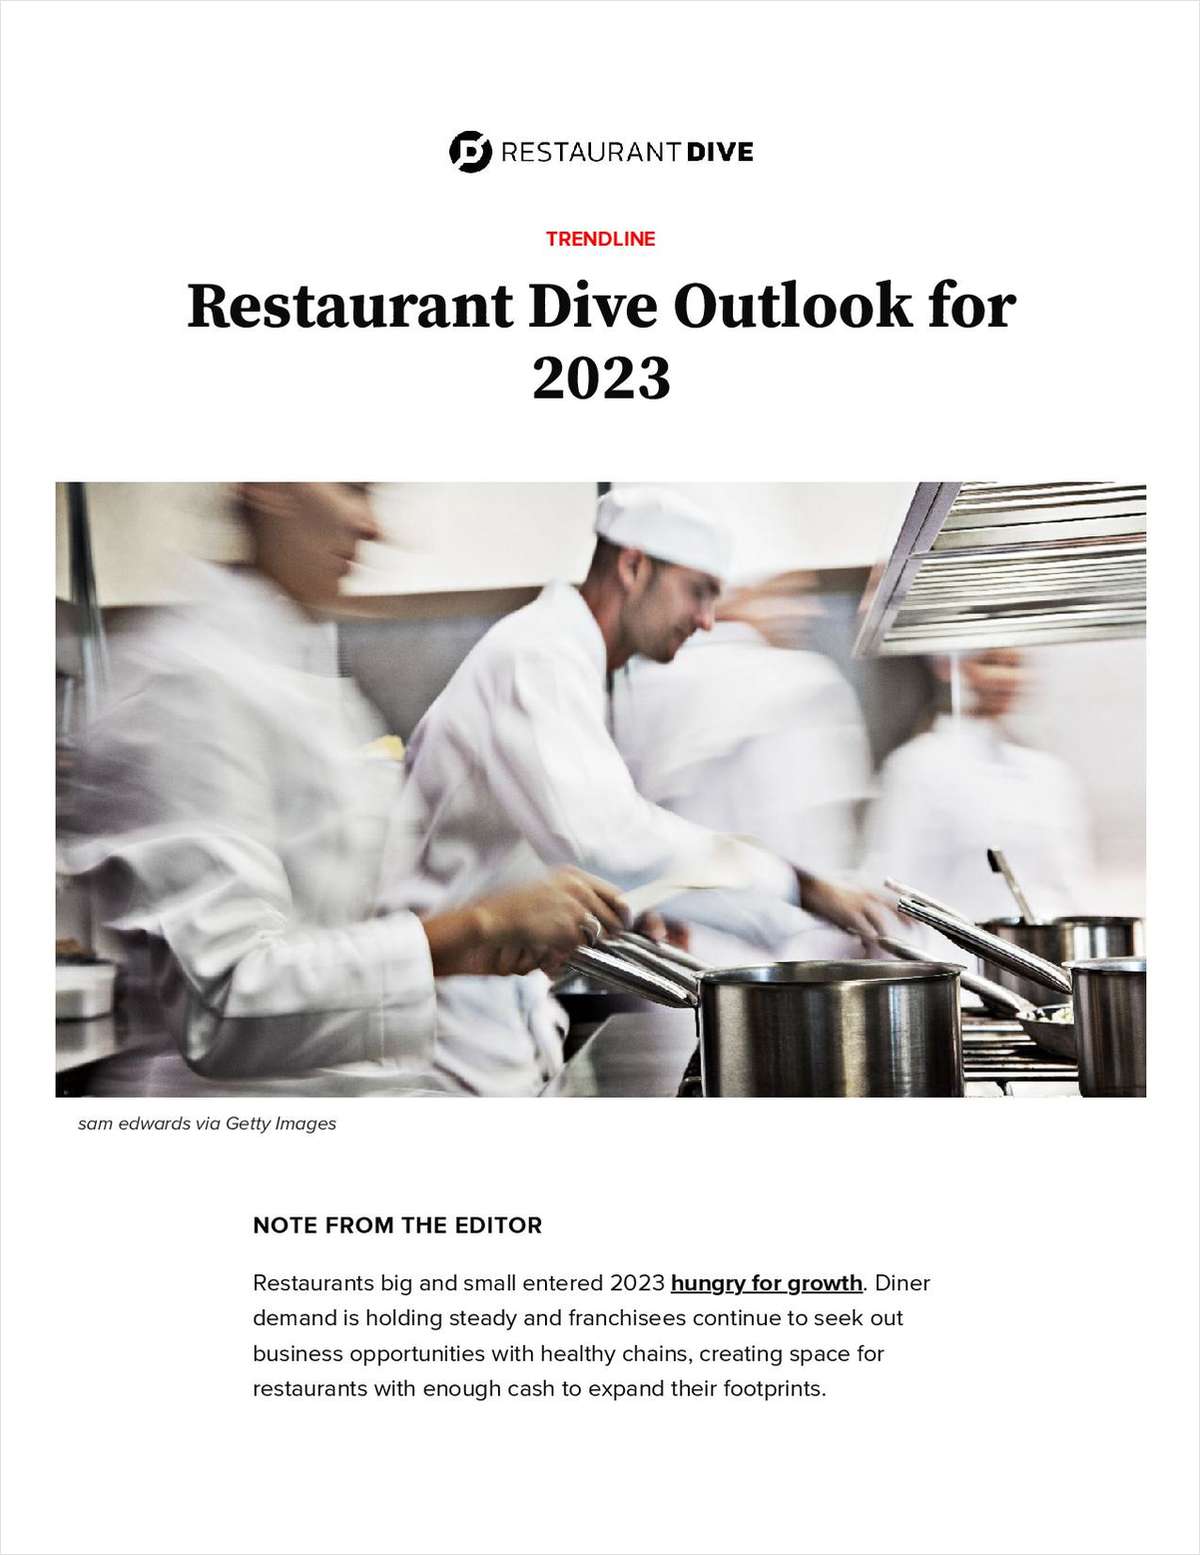 Restaurant Dive Outlook for 2023